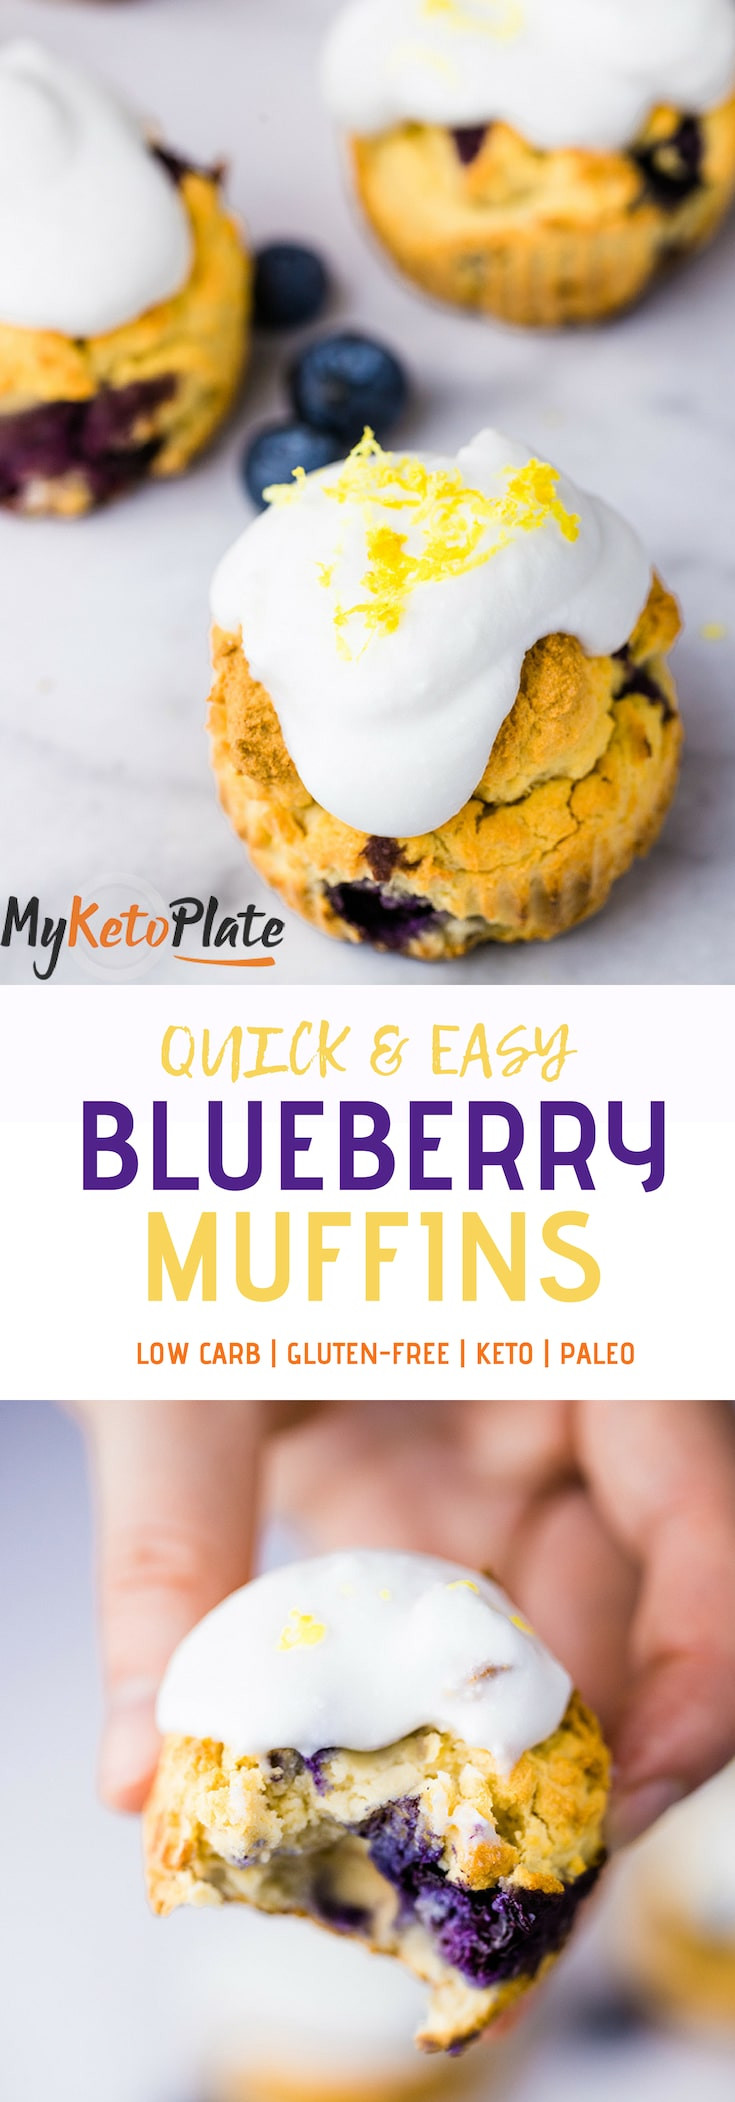 Dairy Free Keto Muffins
 Easy Dairy Free Keto Paleo Blueberry Muffins MyKetoPlate